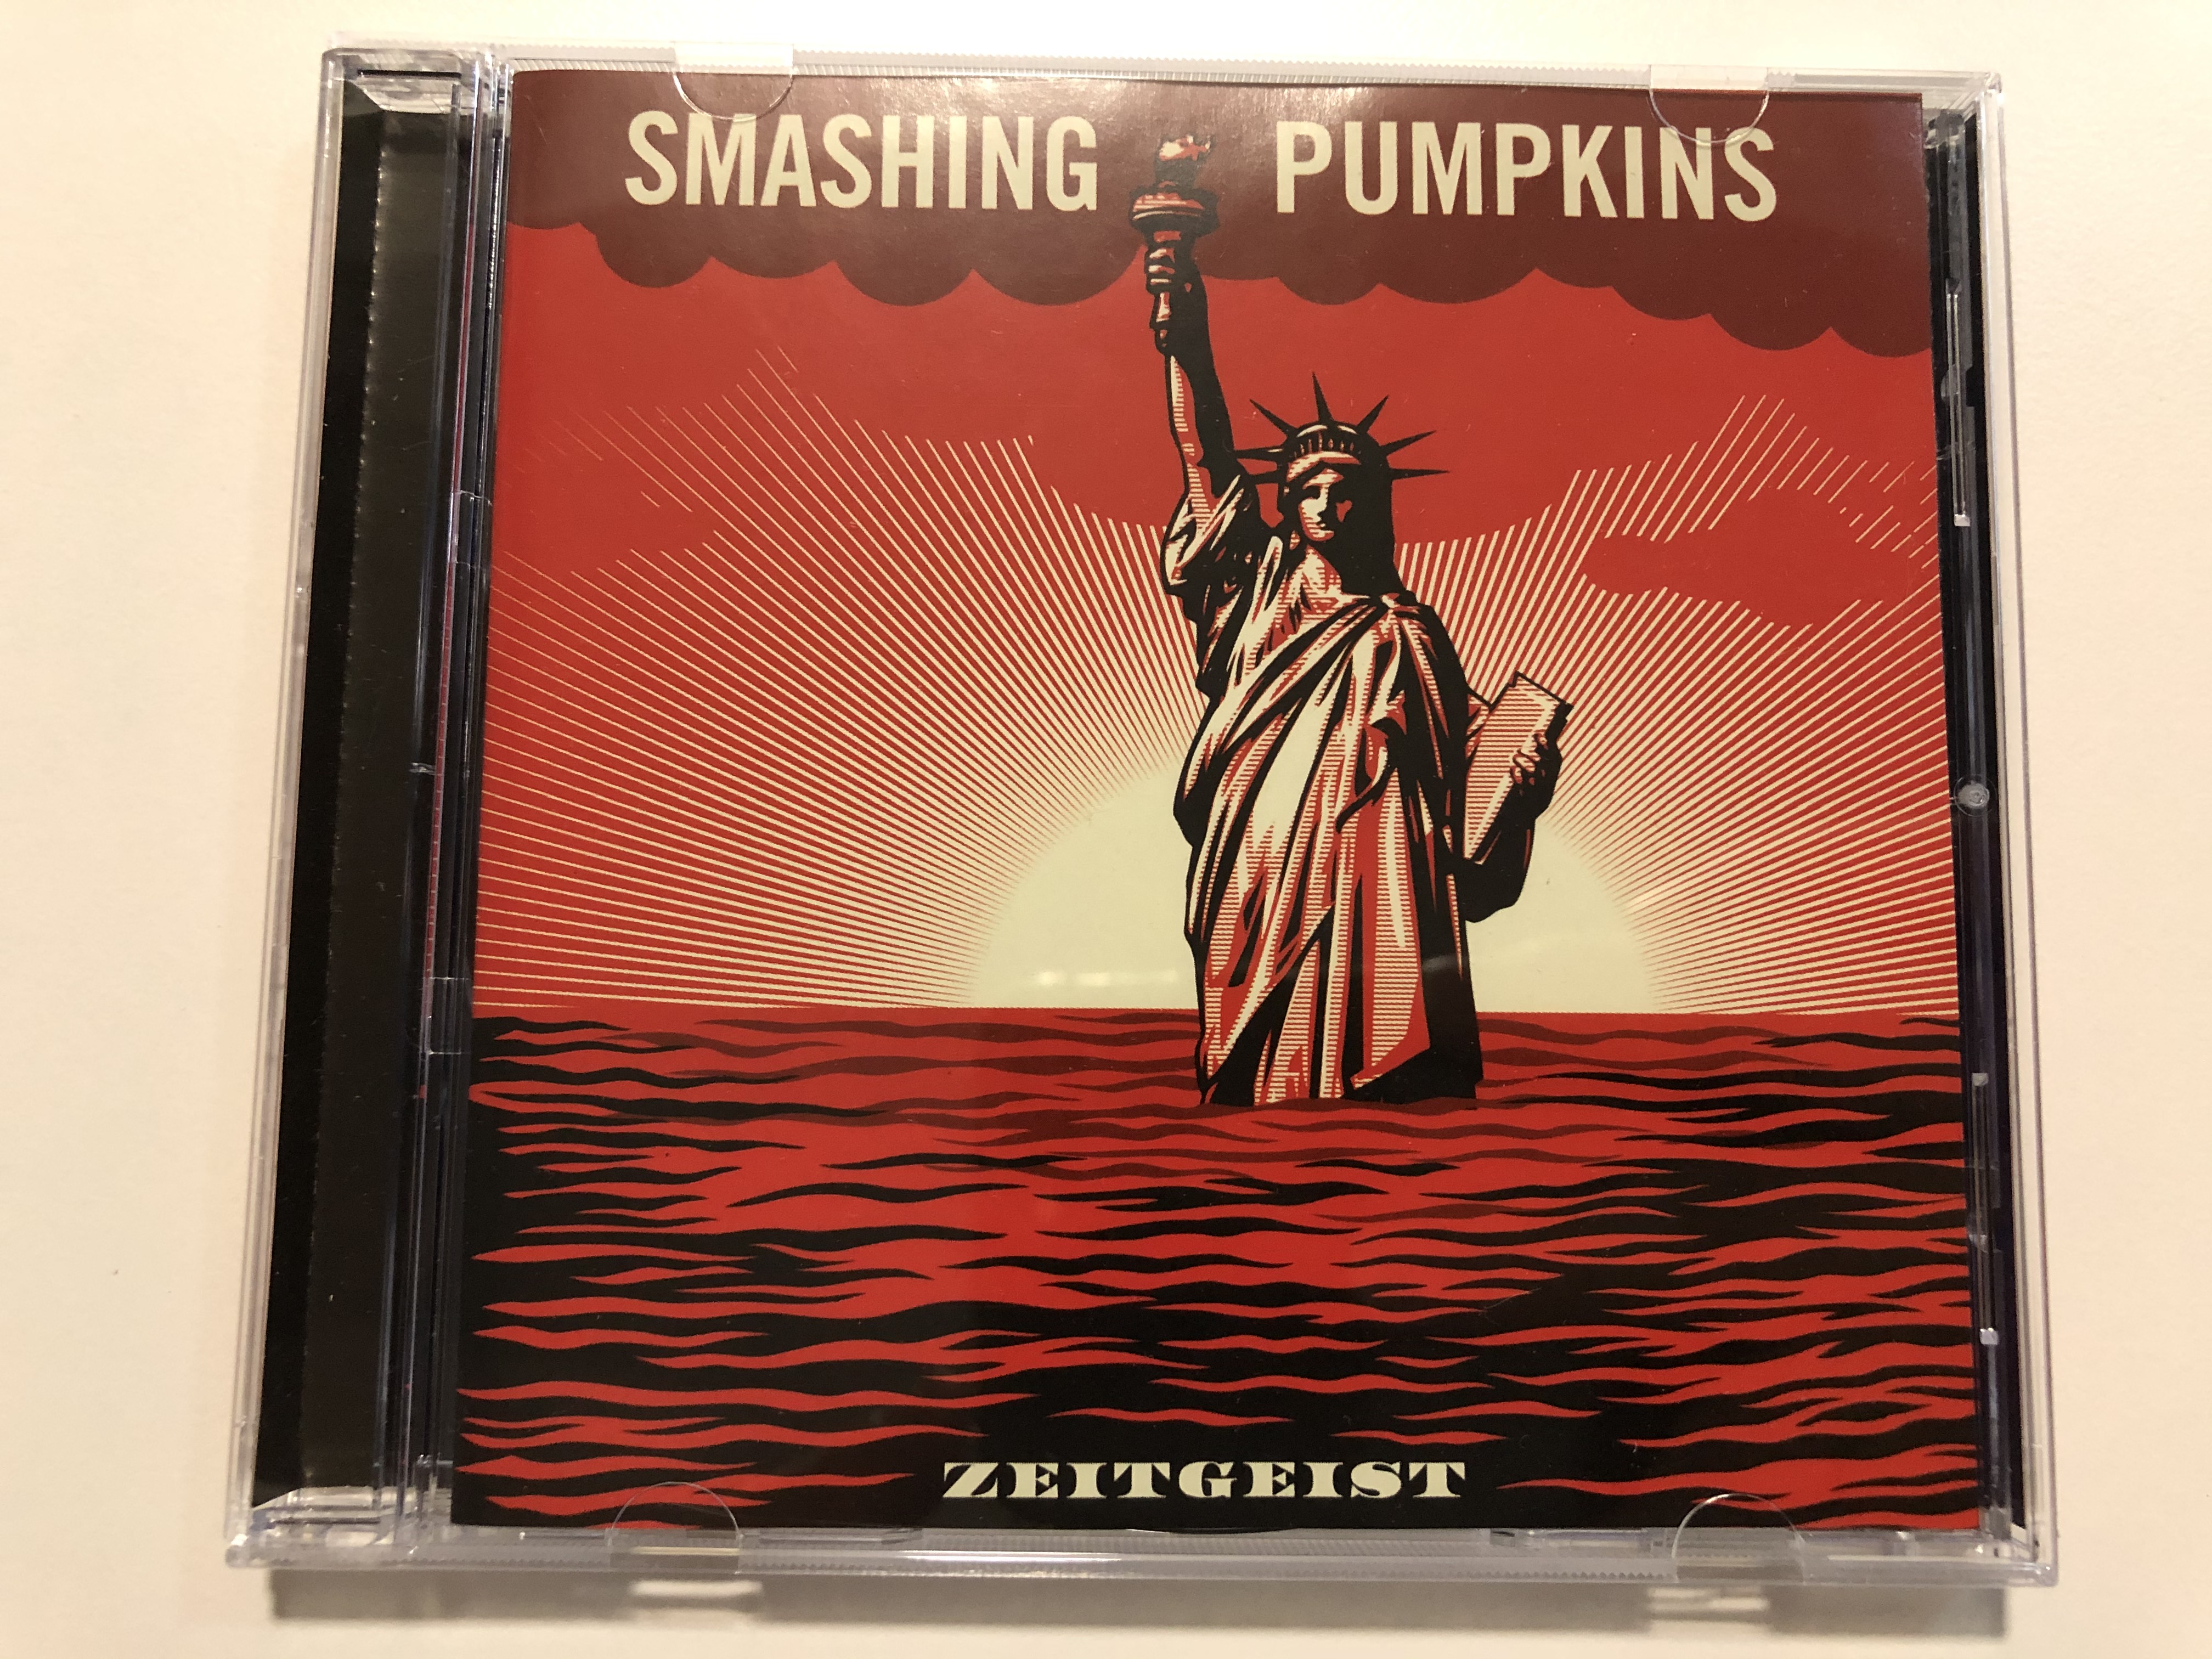 smashing-pumpkins-zeitgeist-martha-s-music-audio-cd-2007-9362-49977-8-1-.jpg